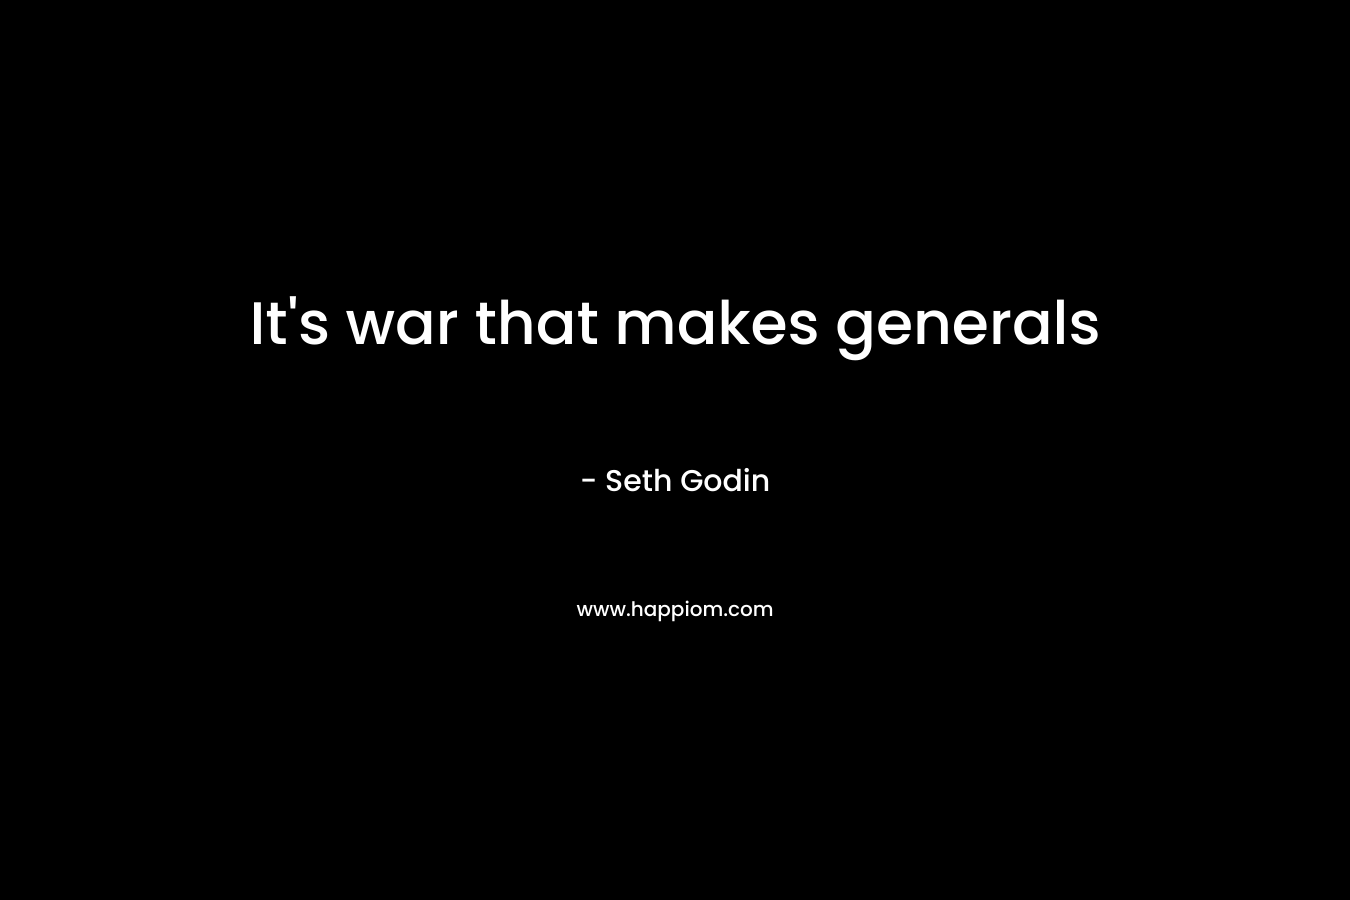 It's war that makes generals